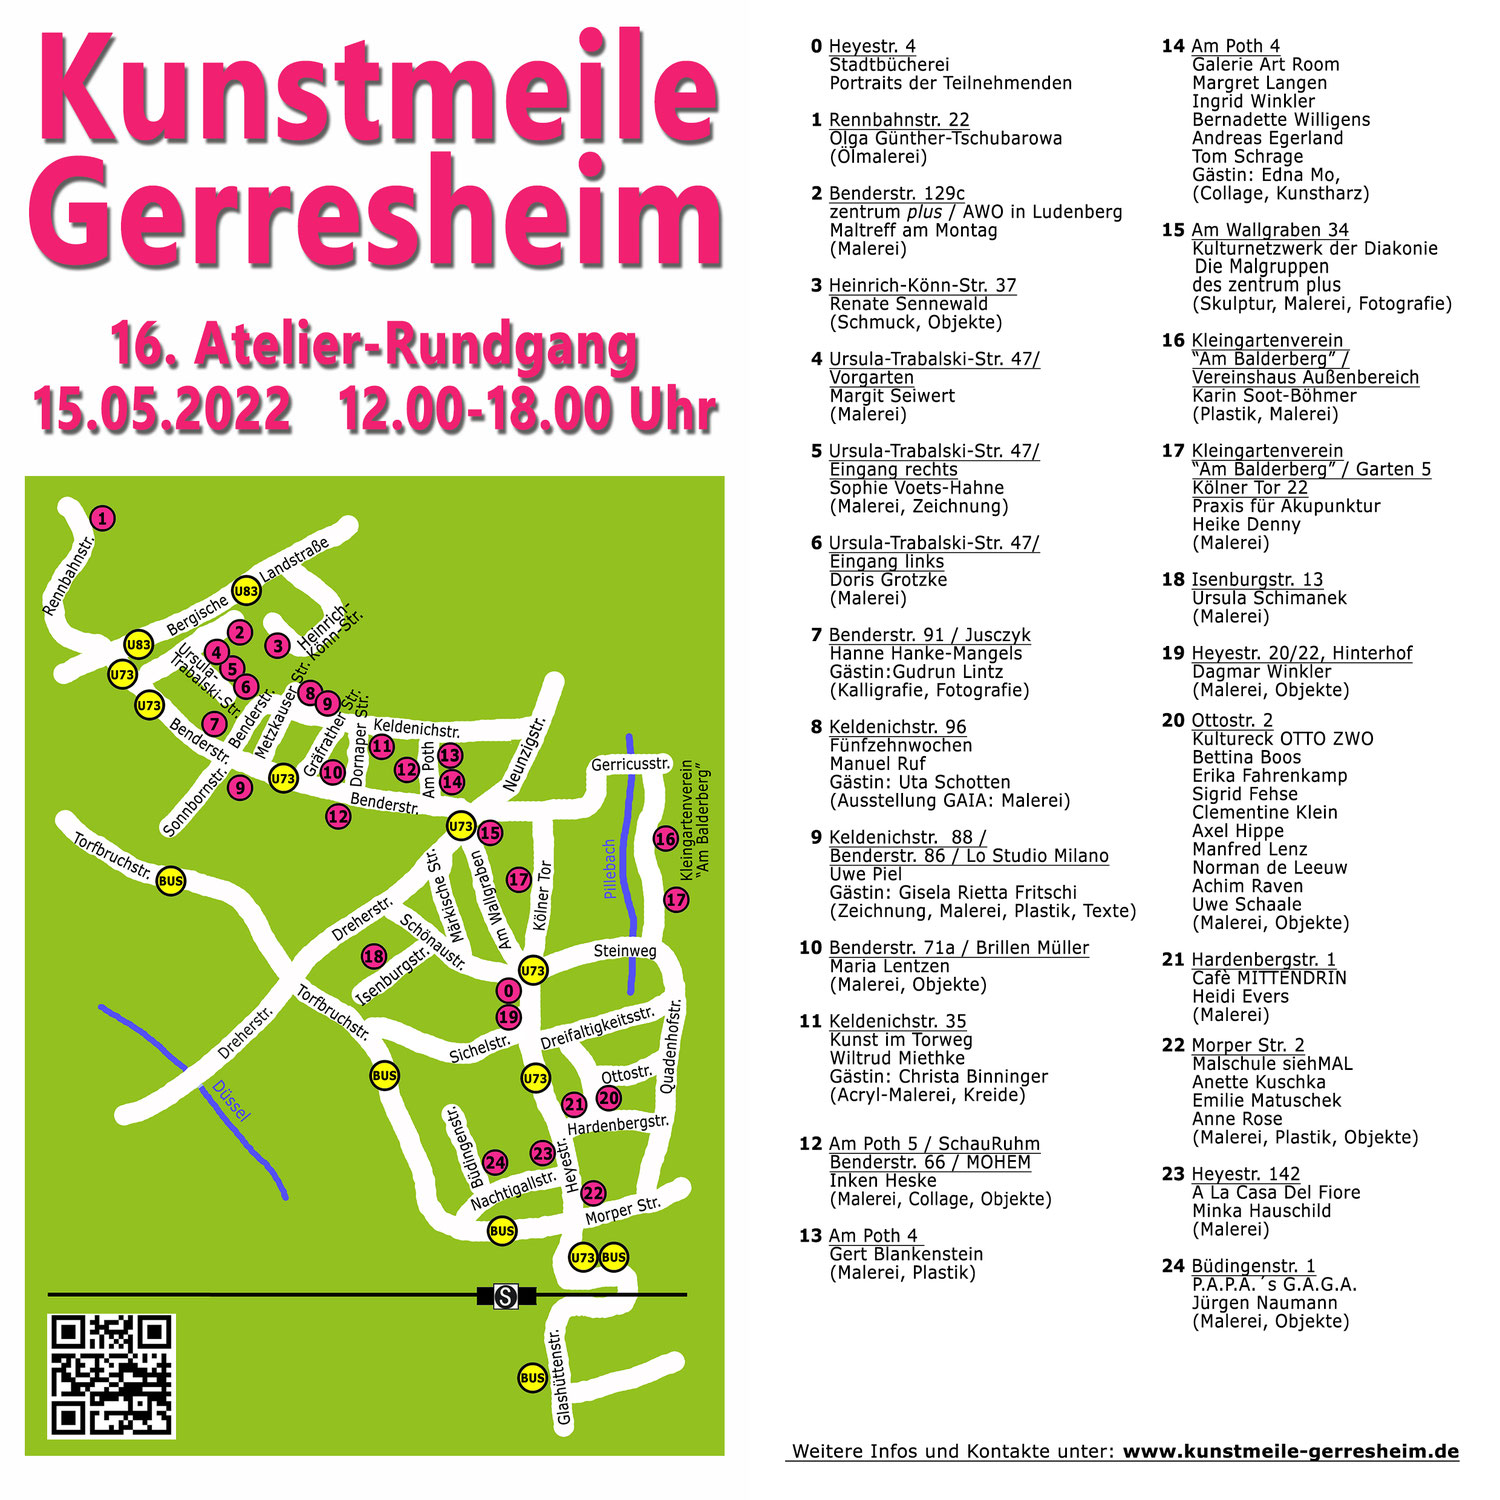 Kunstmeile Gerresheim